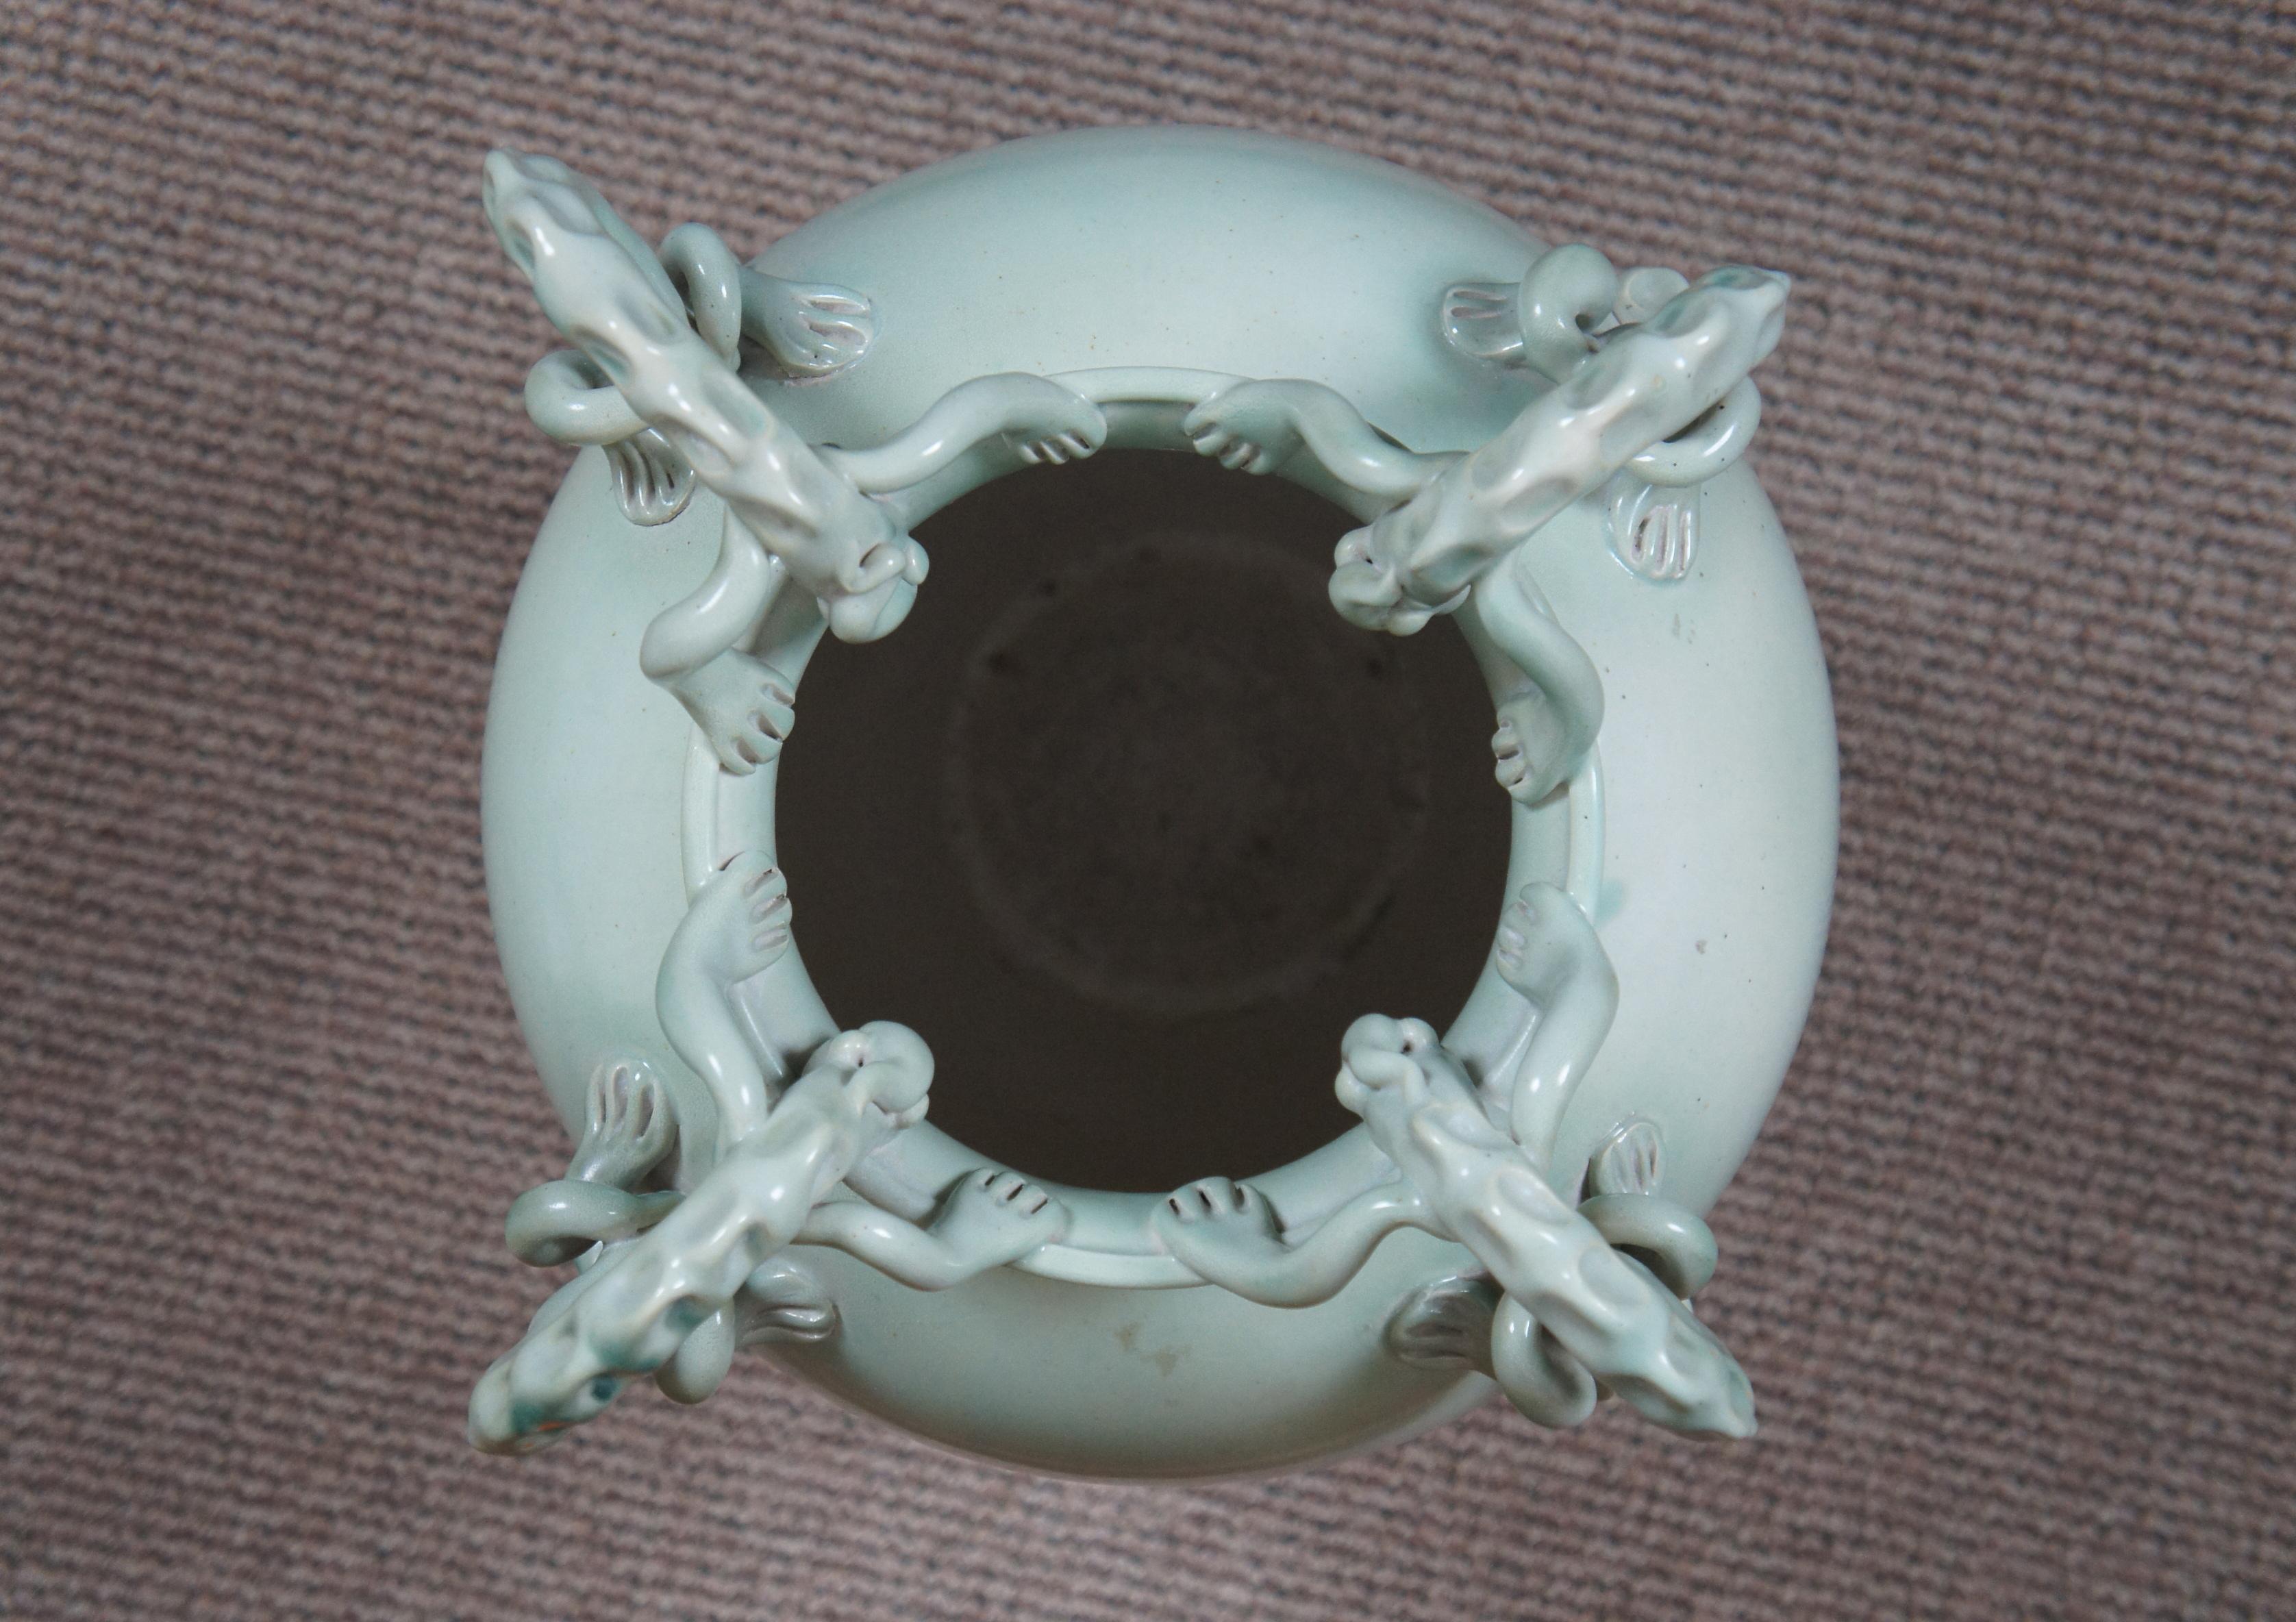 Campaign Maitland Smith Ceramic Lizard Handled Mantel Floor Vase Urn Celedon Teal Green